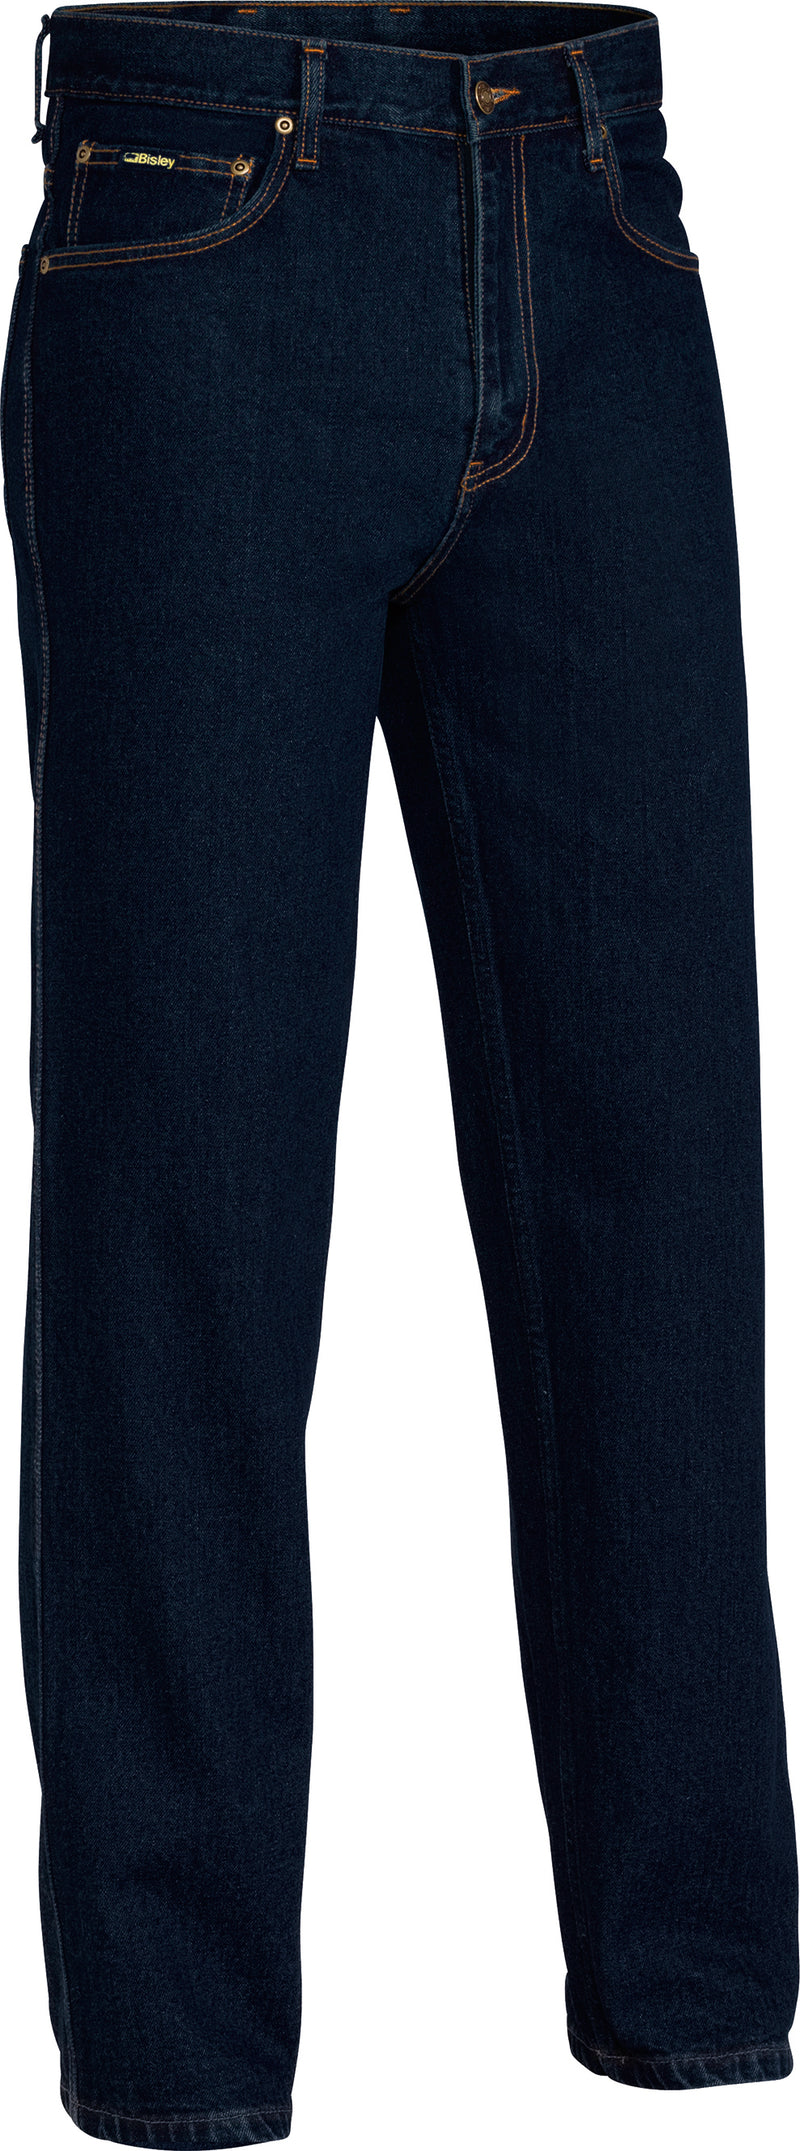 Load image into Gallery viewer, Wholesale BP6050 Bisley Rough Rider Denim Jeans - Long Printed or Blank
